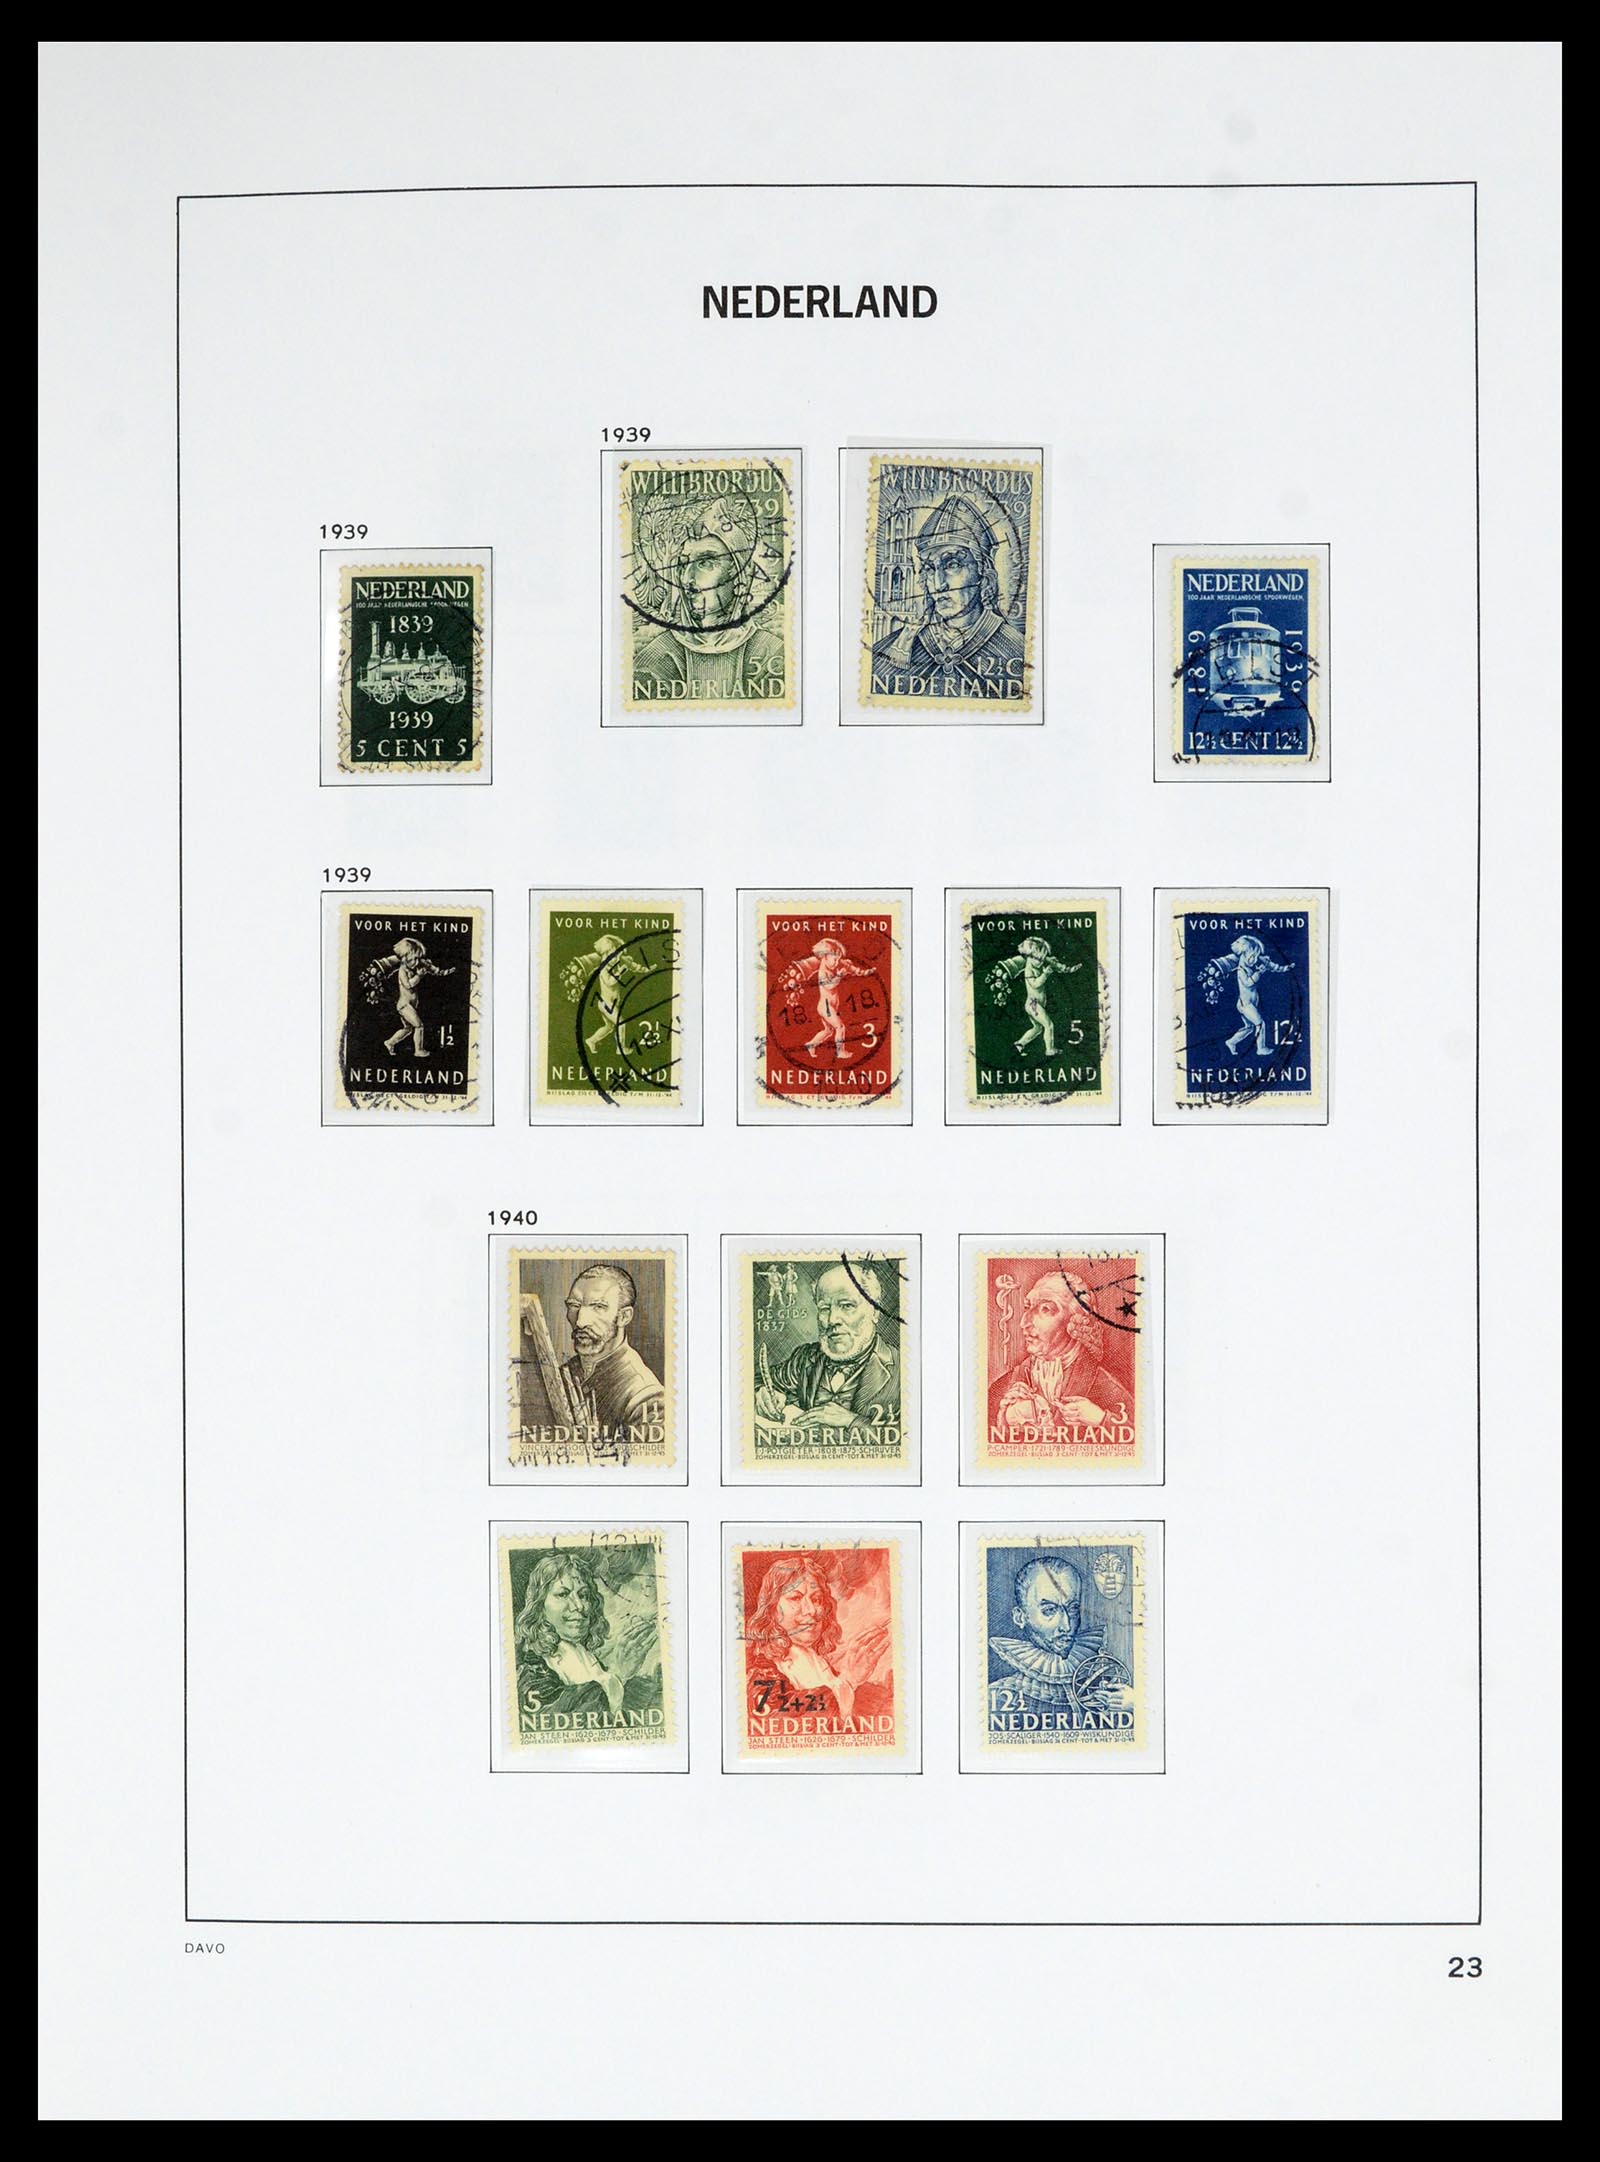 36629 023 - Stamp collection 36629 Nederland 1852-1989.